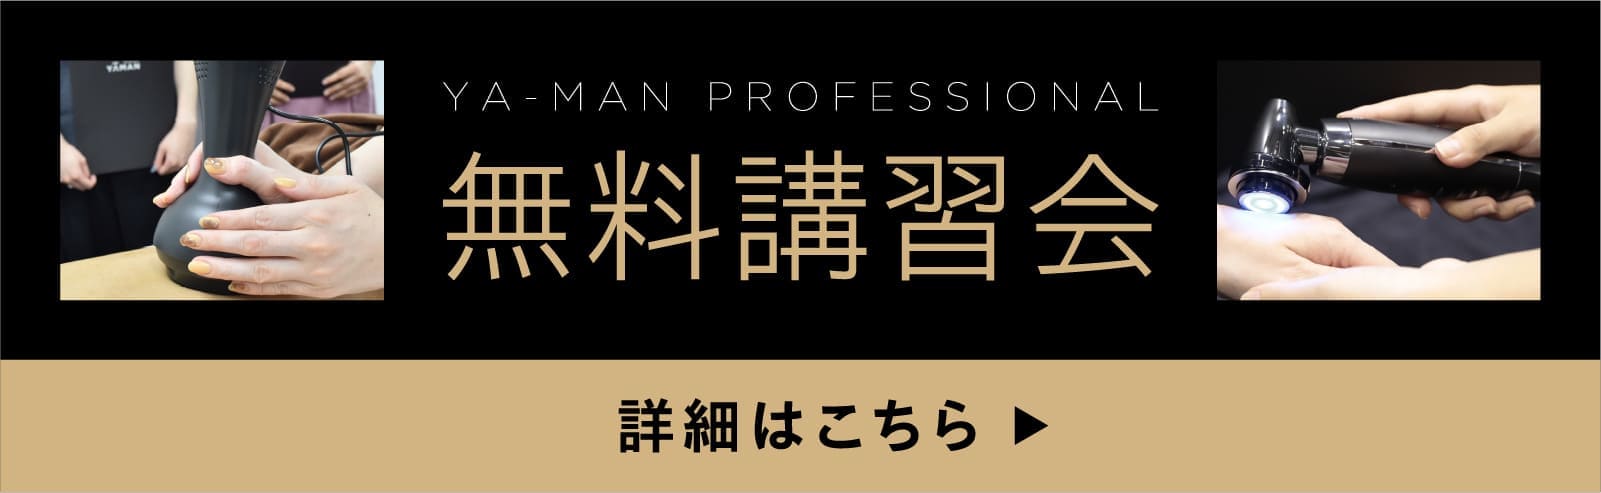 YA-MAN PROFESSIONAL無料講習会